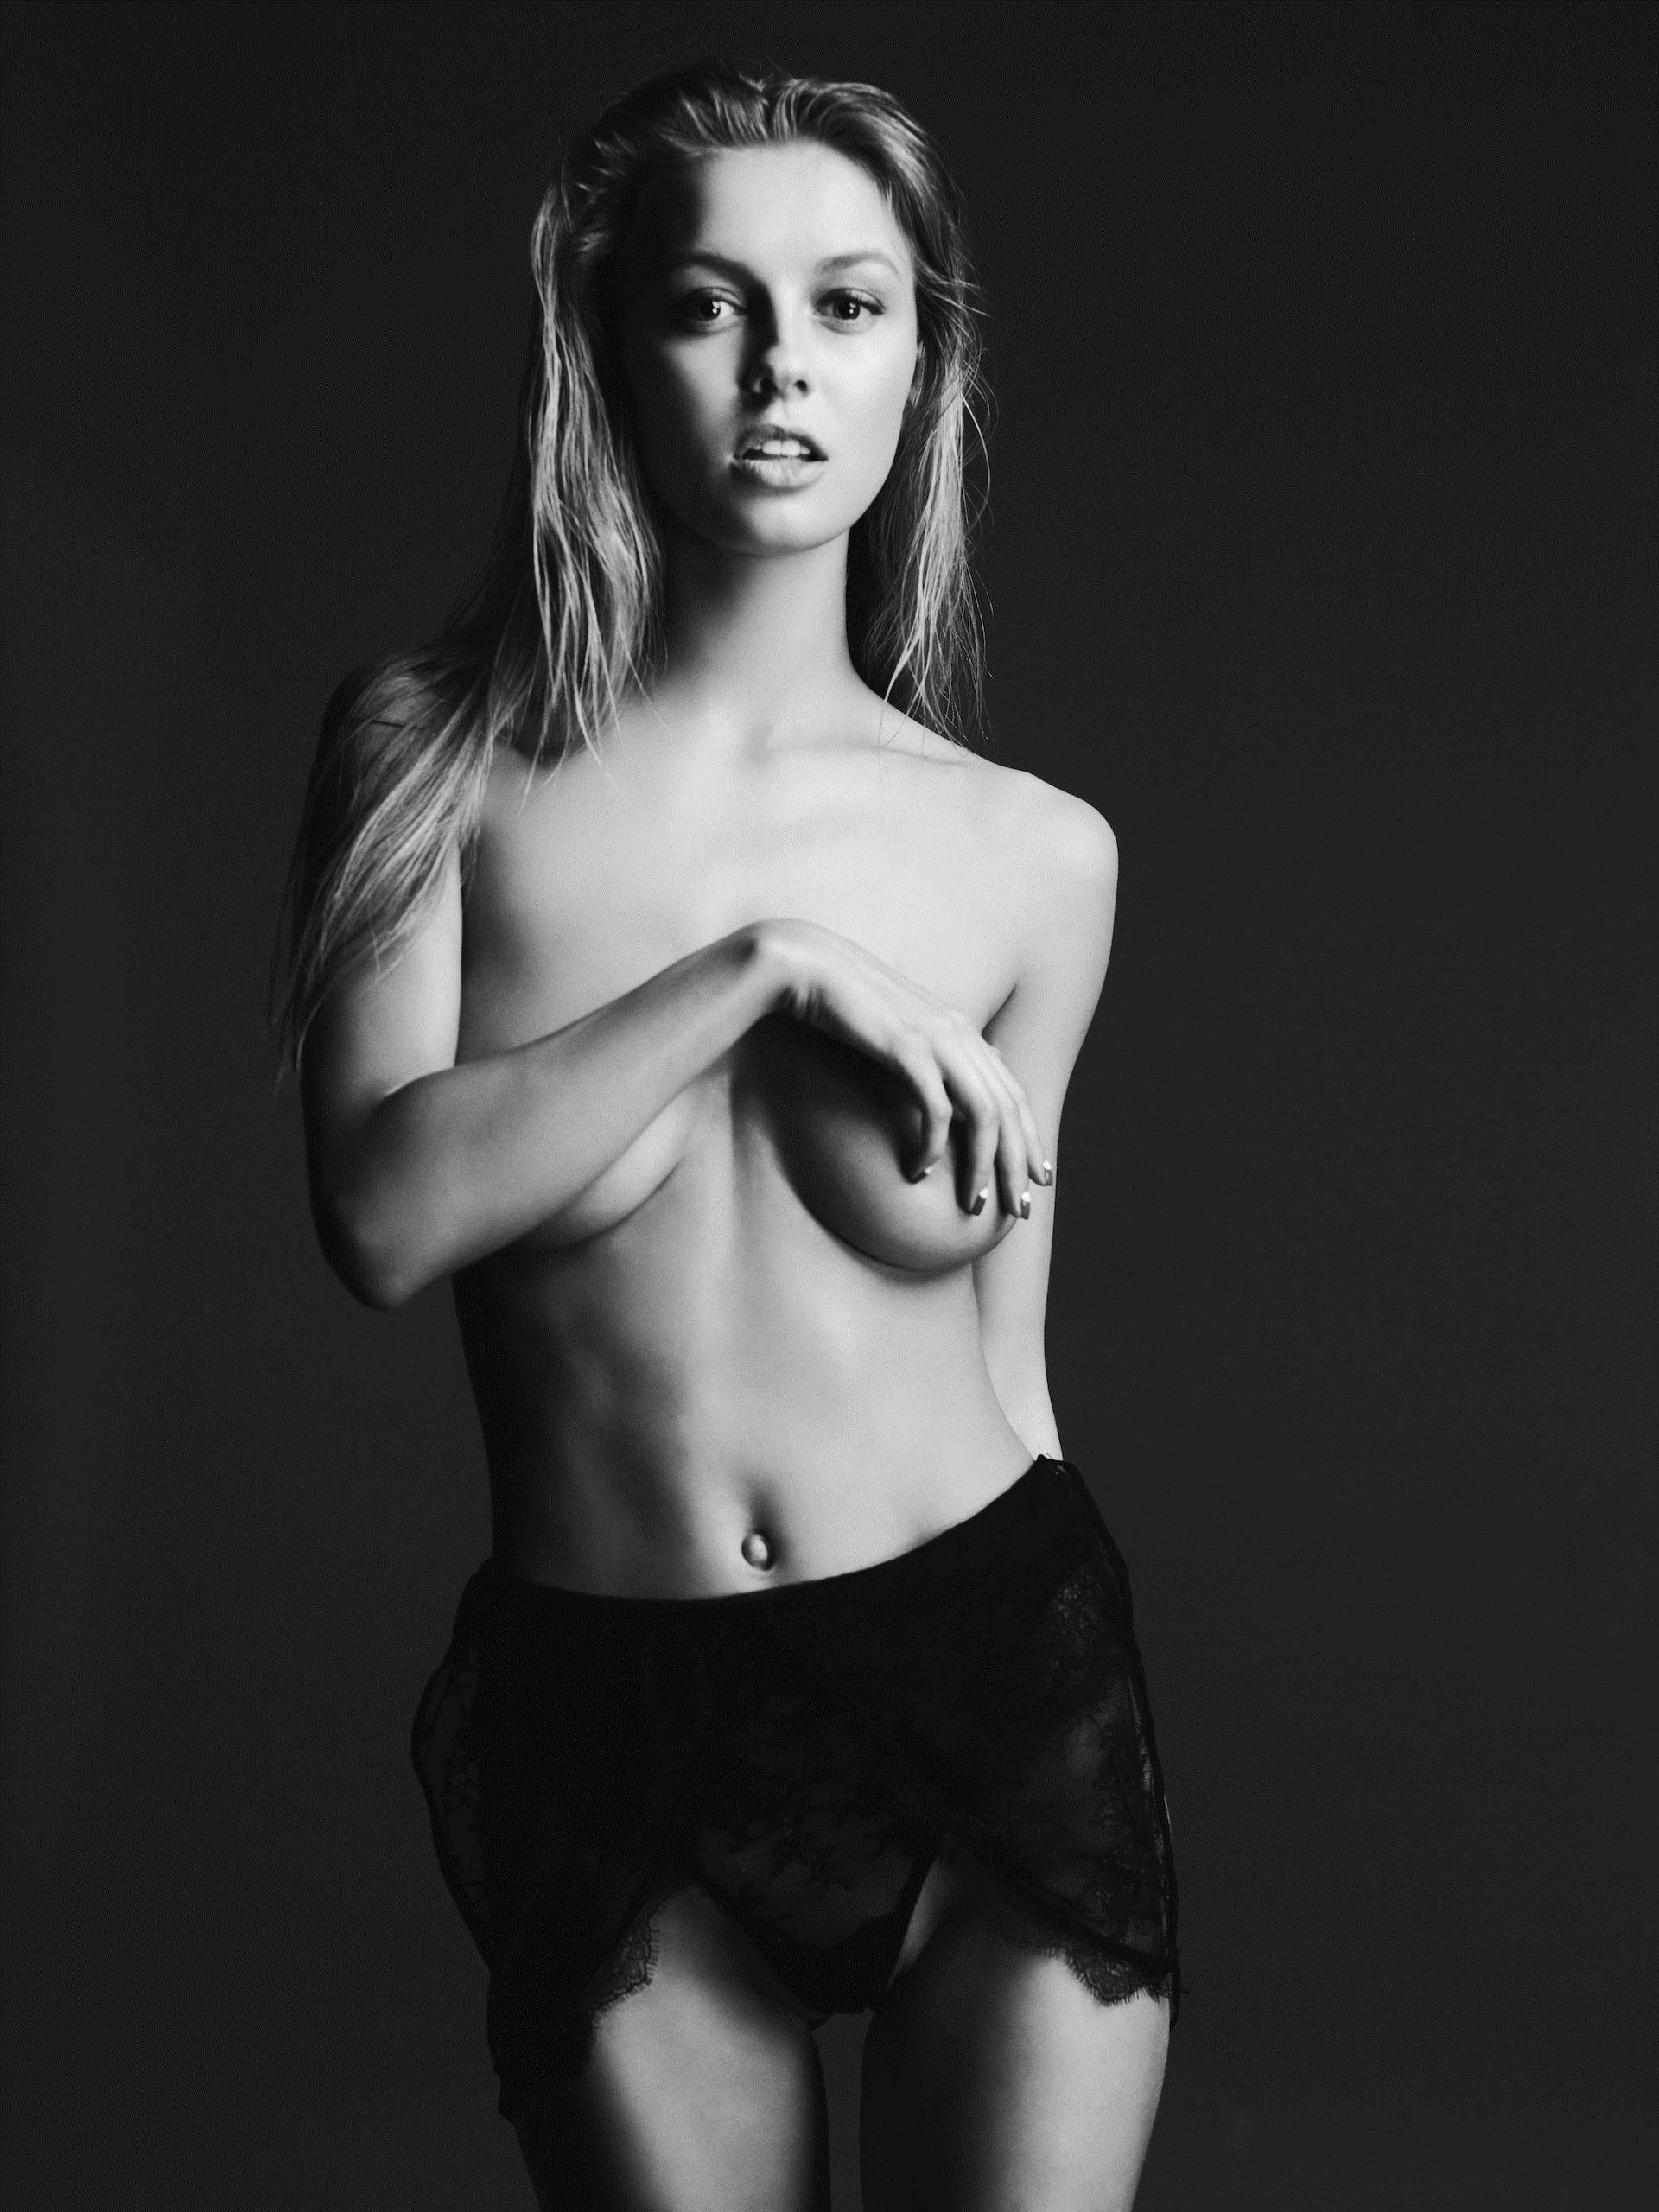 Alena Filinkova Nude Pictures. 